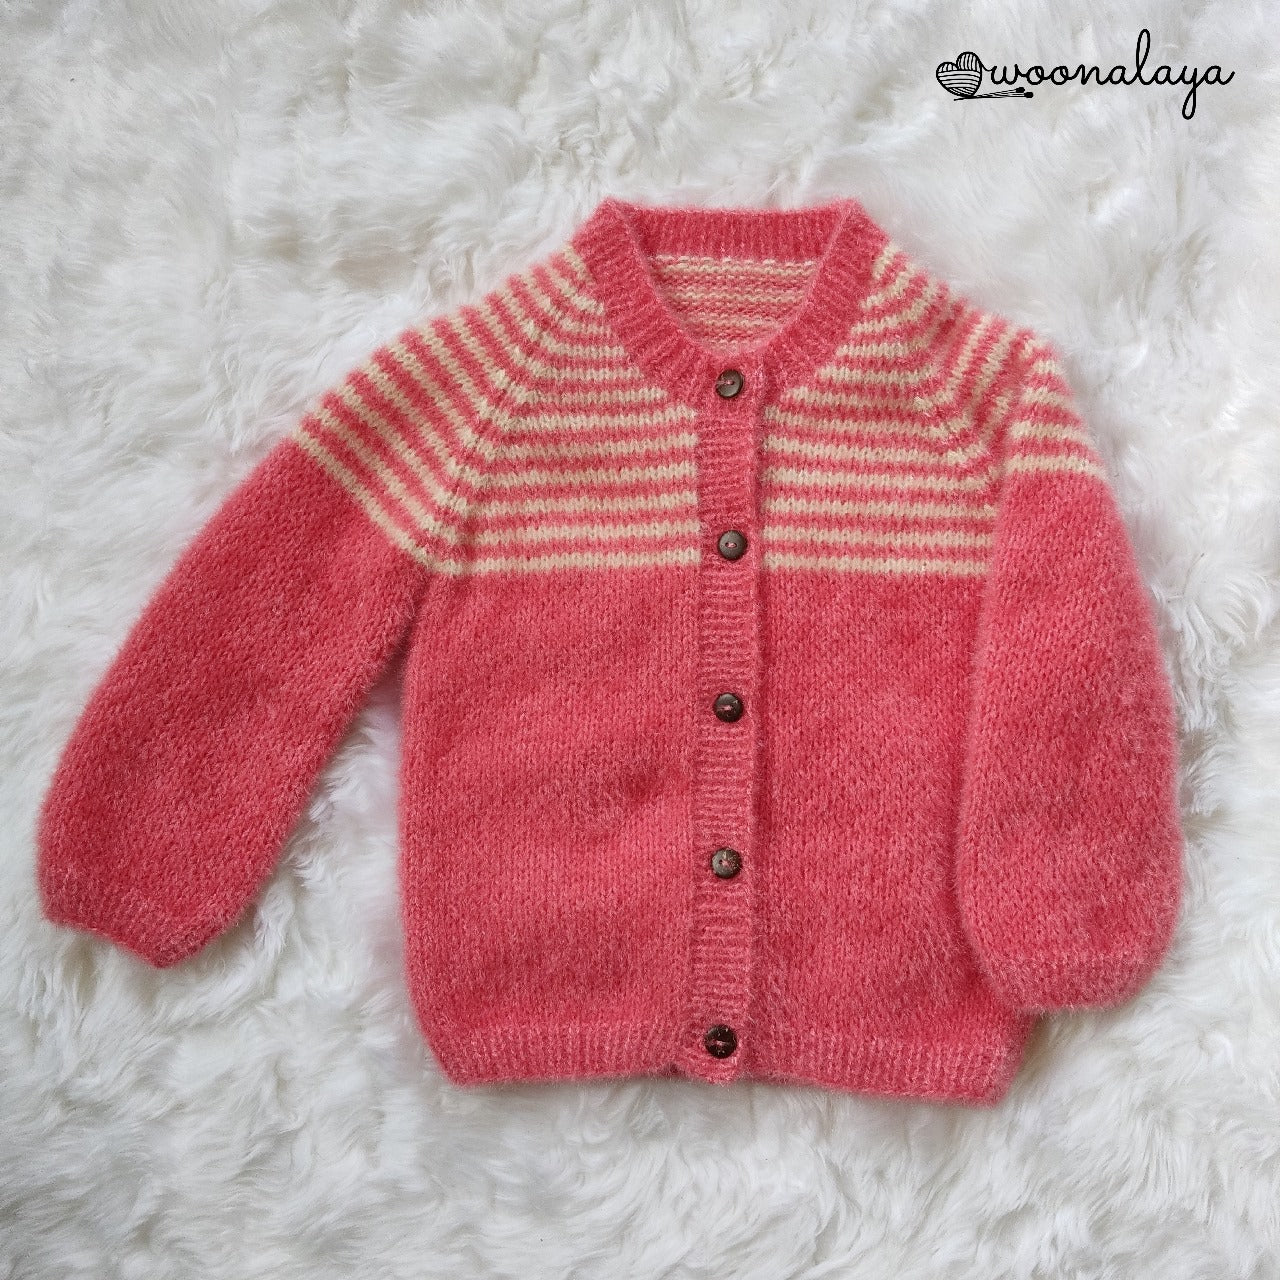 Woonalaya Hand Knitted Cardigan Sweater